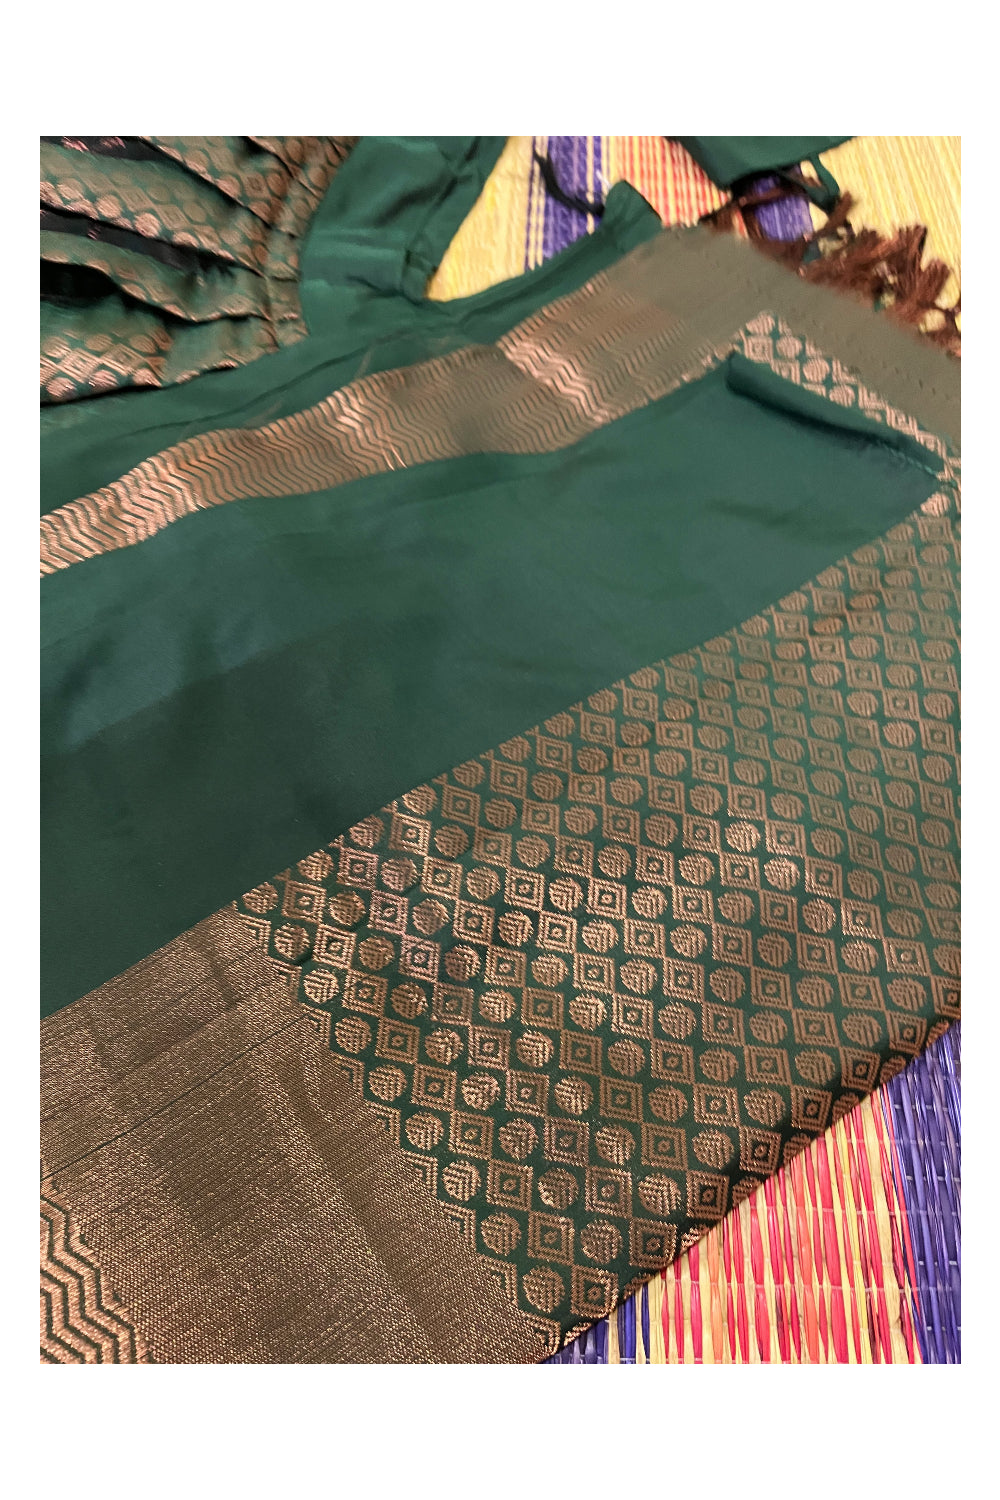 Southloom Semi Stitched Semi Silk Dark Green Dhavani Set include Neriyathu and Blouse Piece